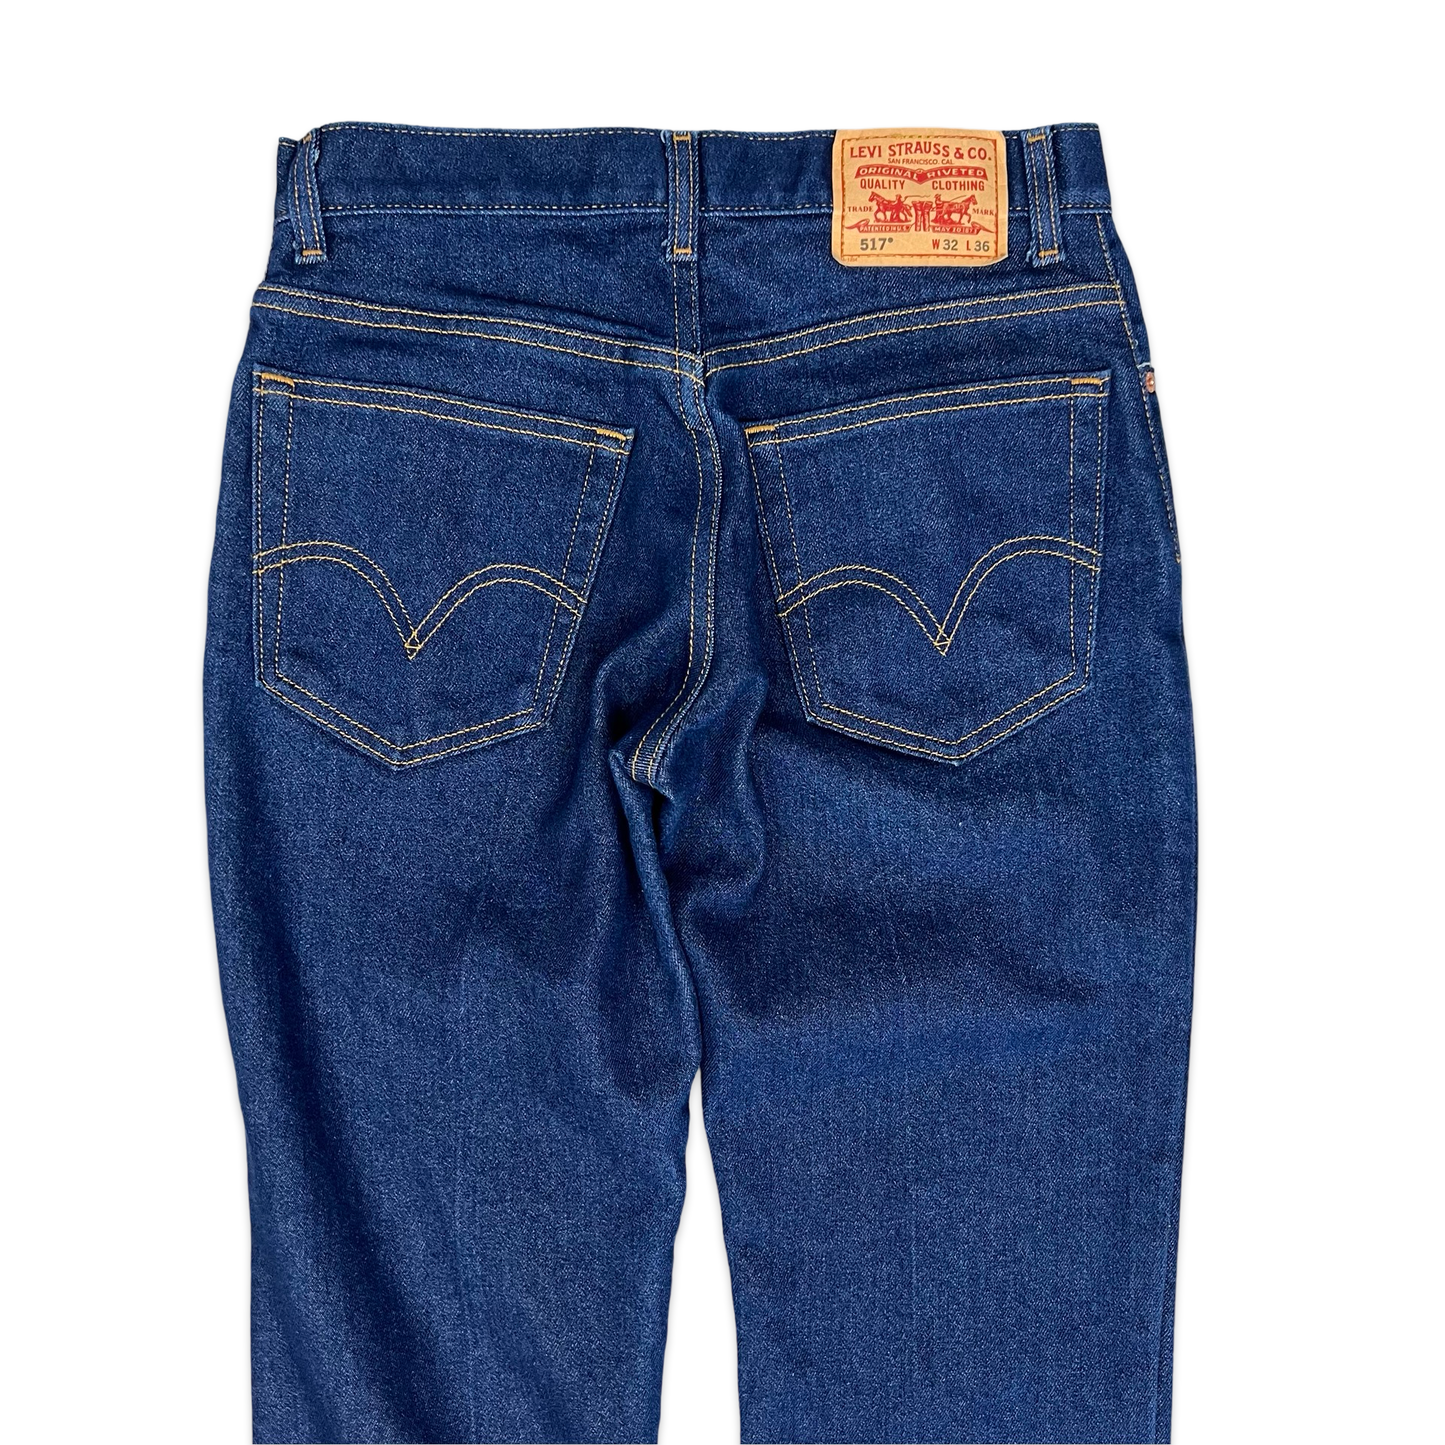 Levi's 517 Boot Cut Blue Jeans W30 L36